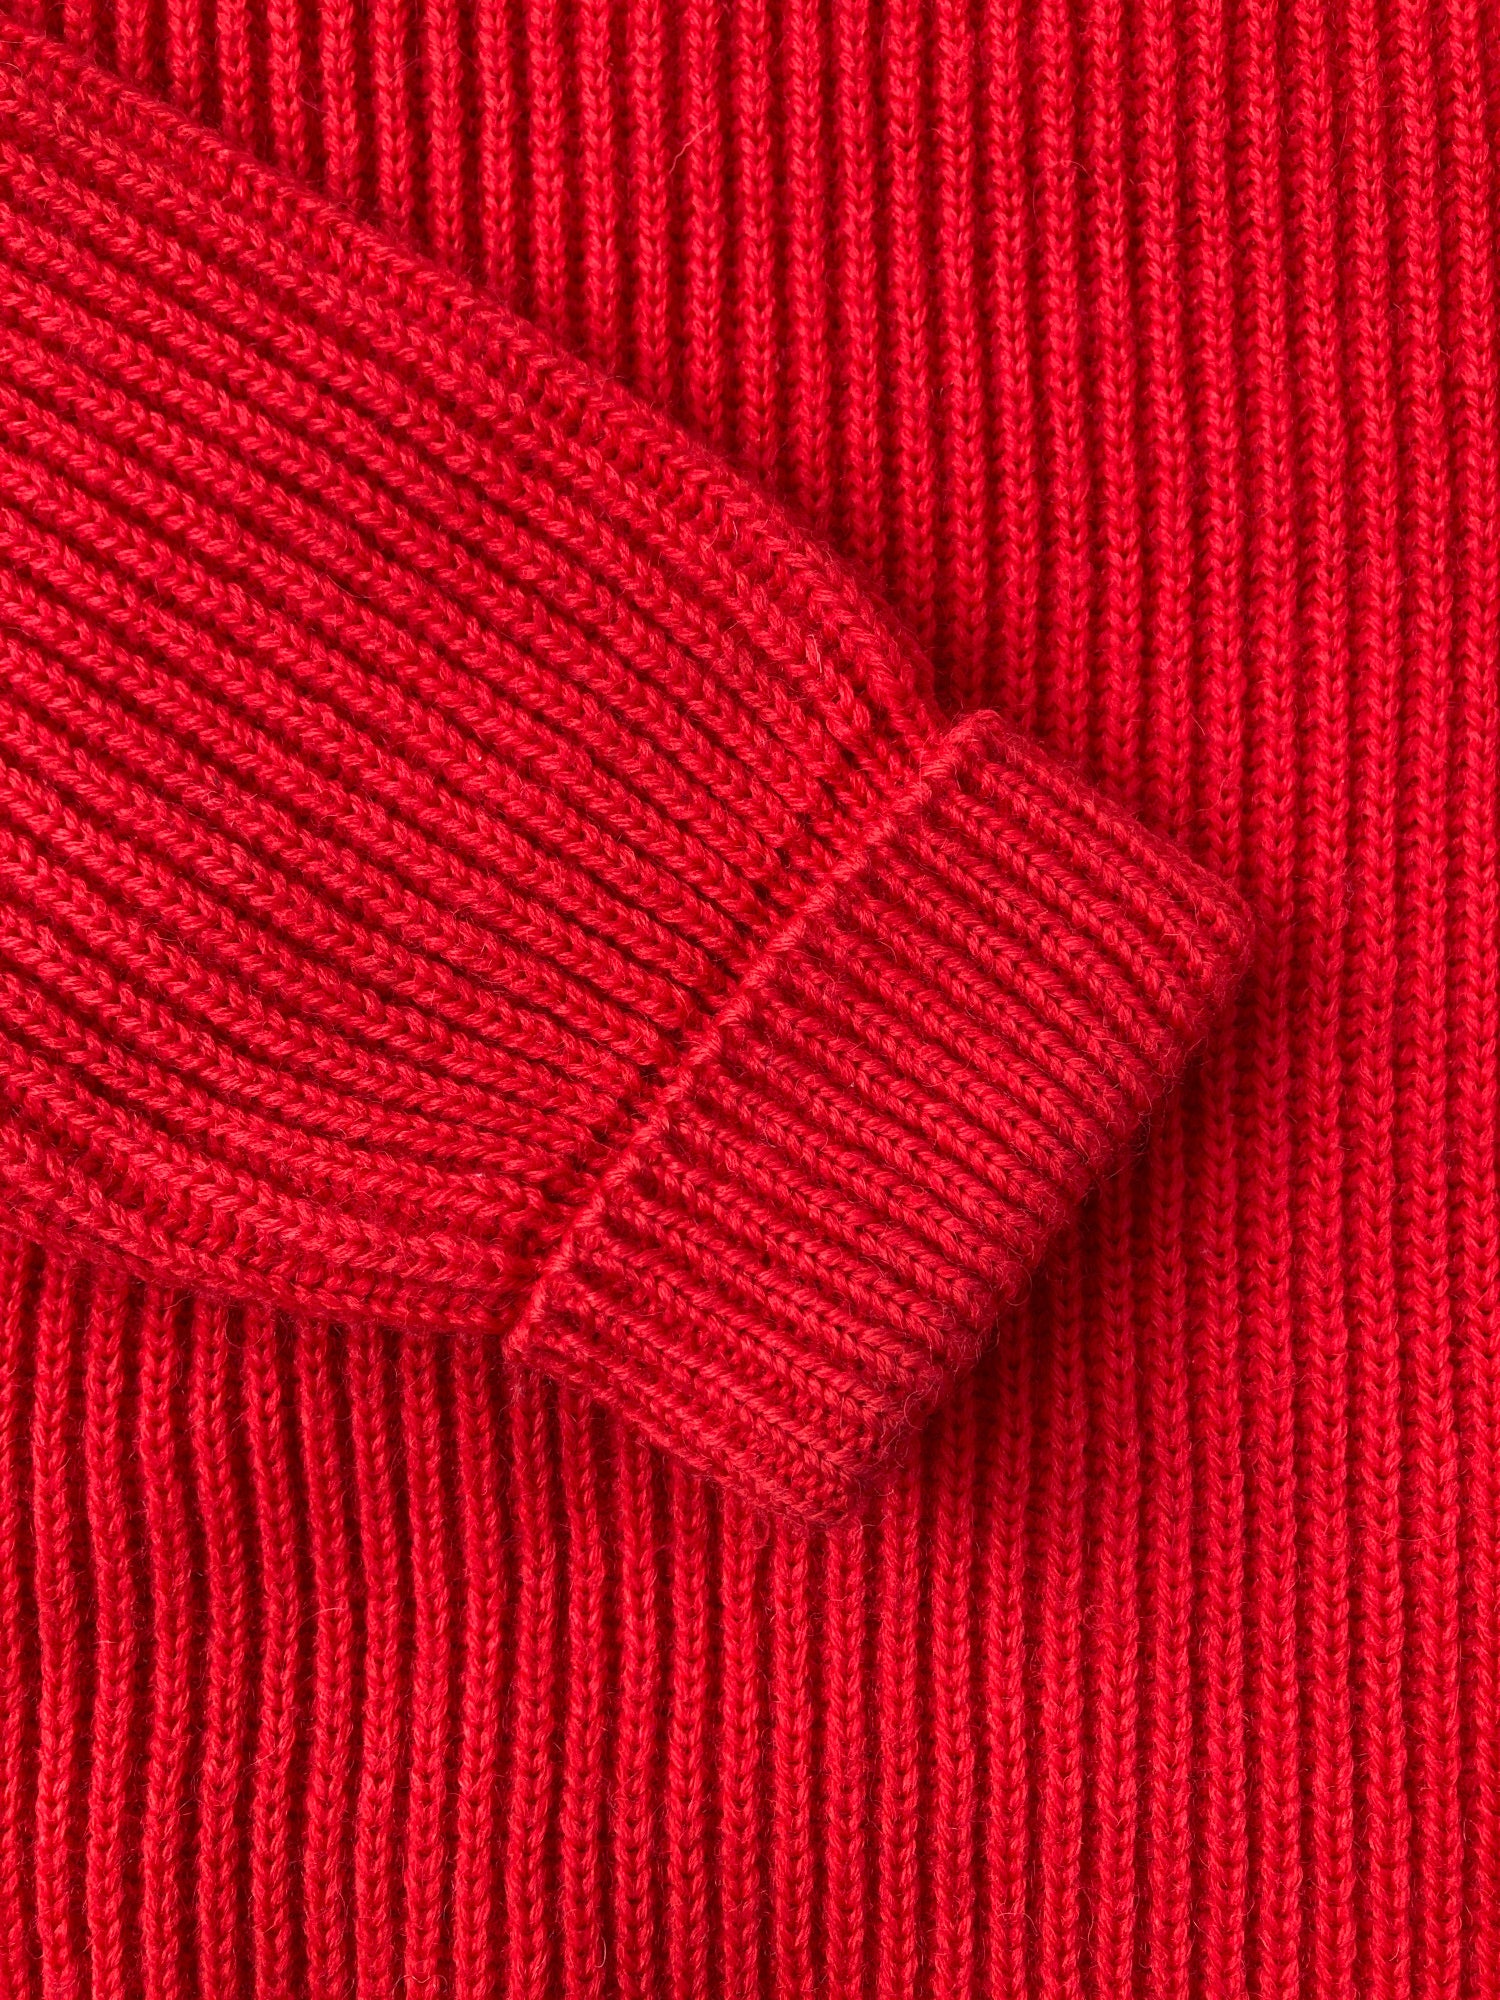 Peter Storm 1985 orange-y red W1 proofed wool waterproof crew neck jumper